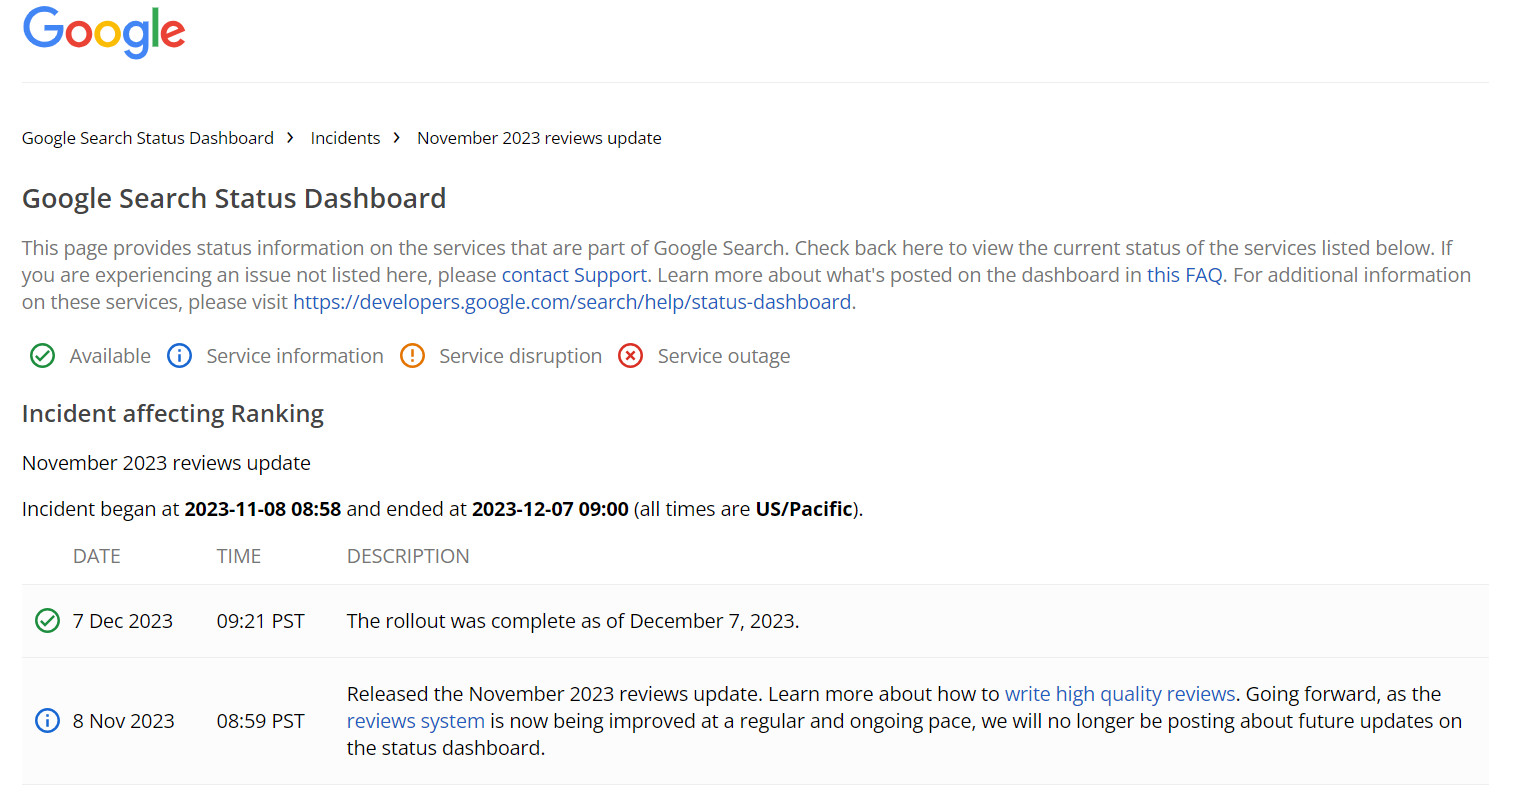 Google Reviews Update vom November 23 ist abgeschlossen